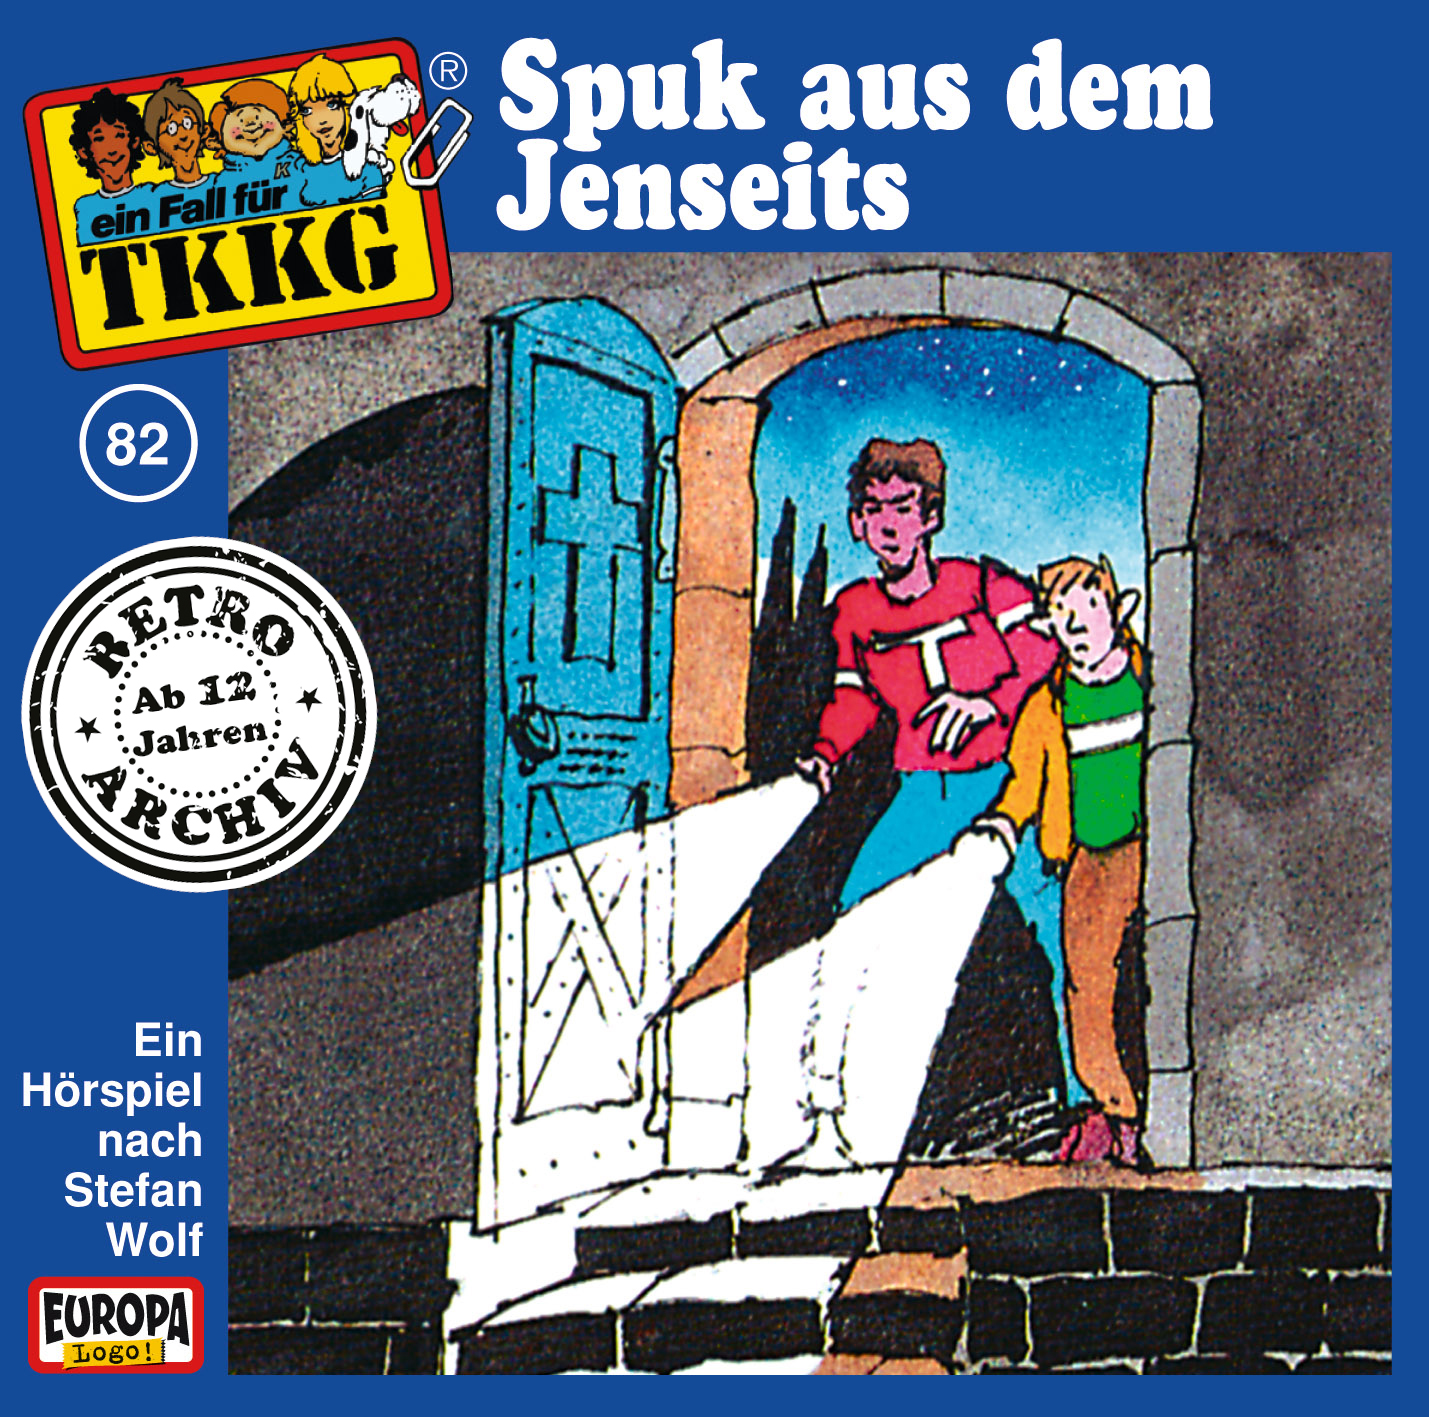 TKKG Retro-Archiv - Spuk aus dem Jenseits